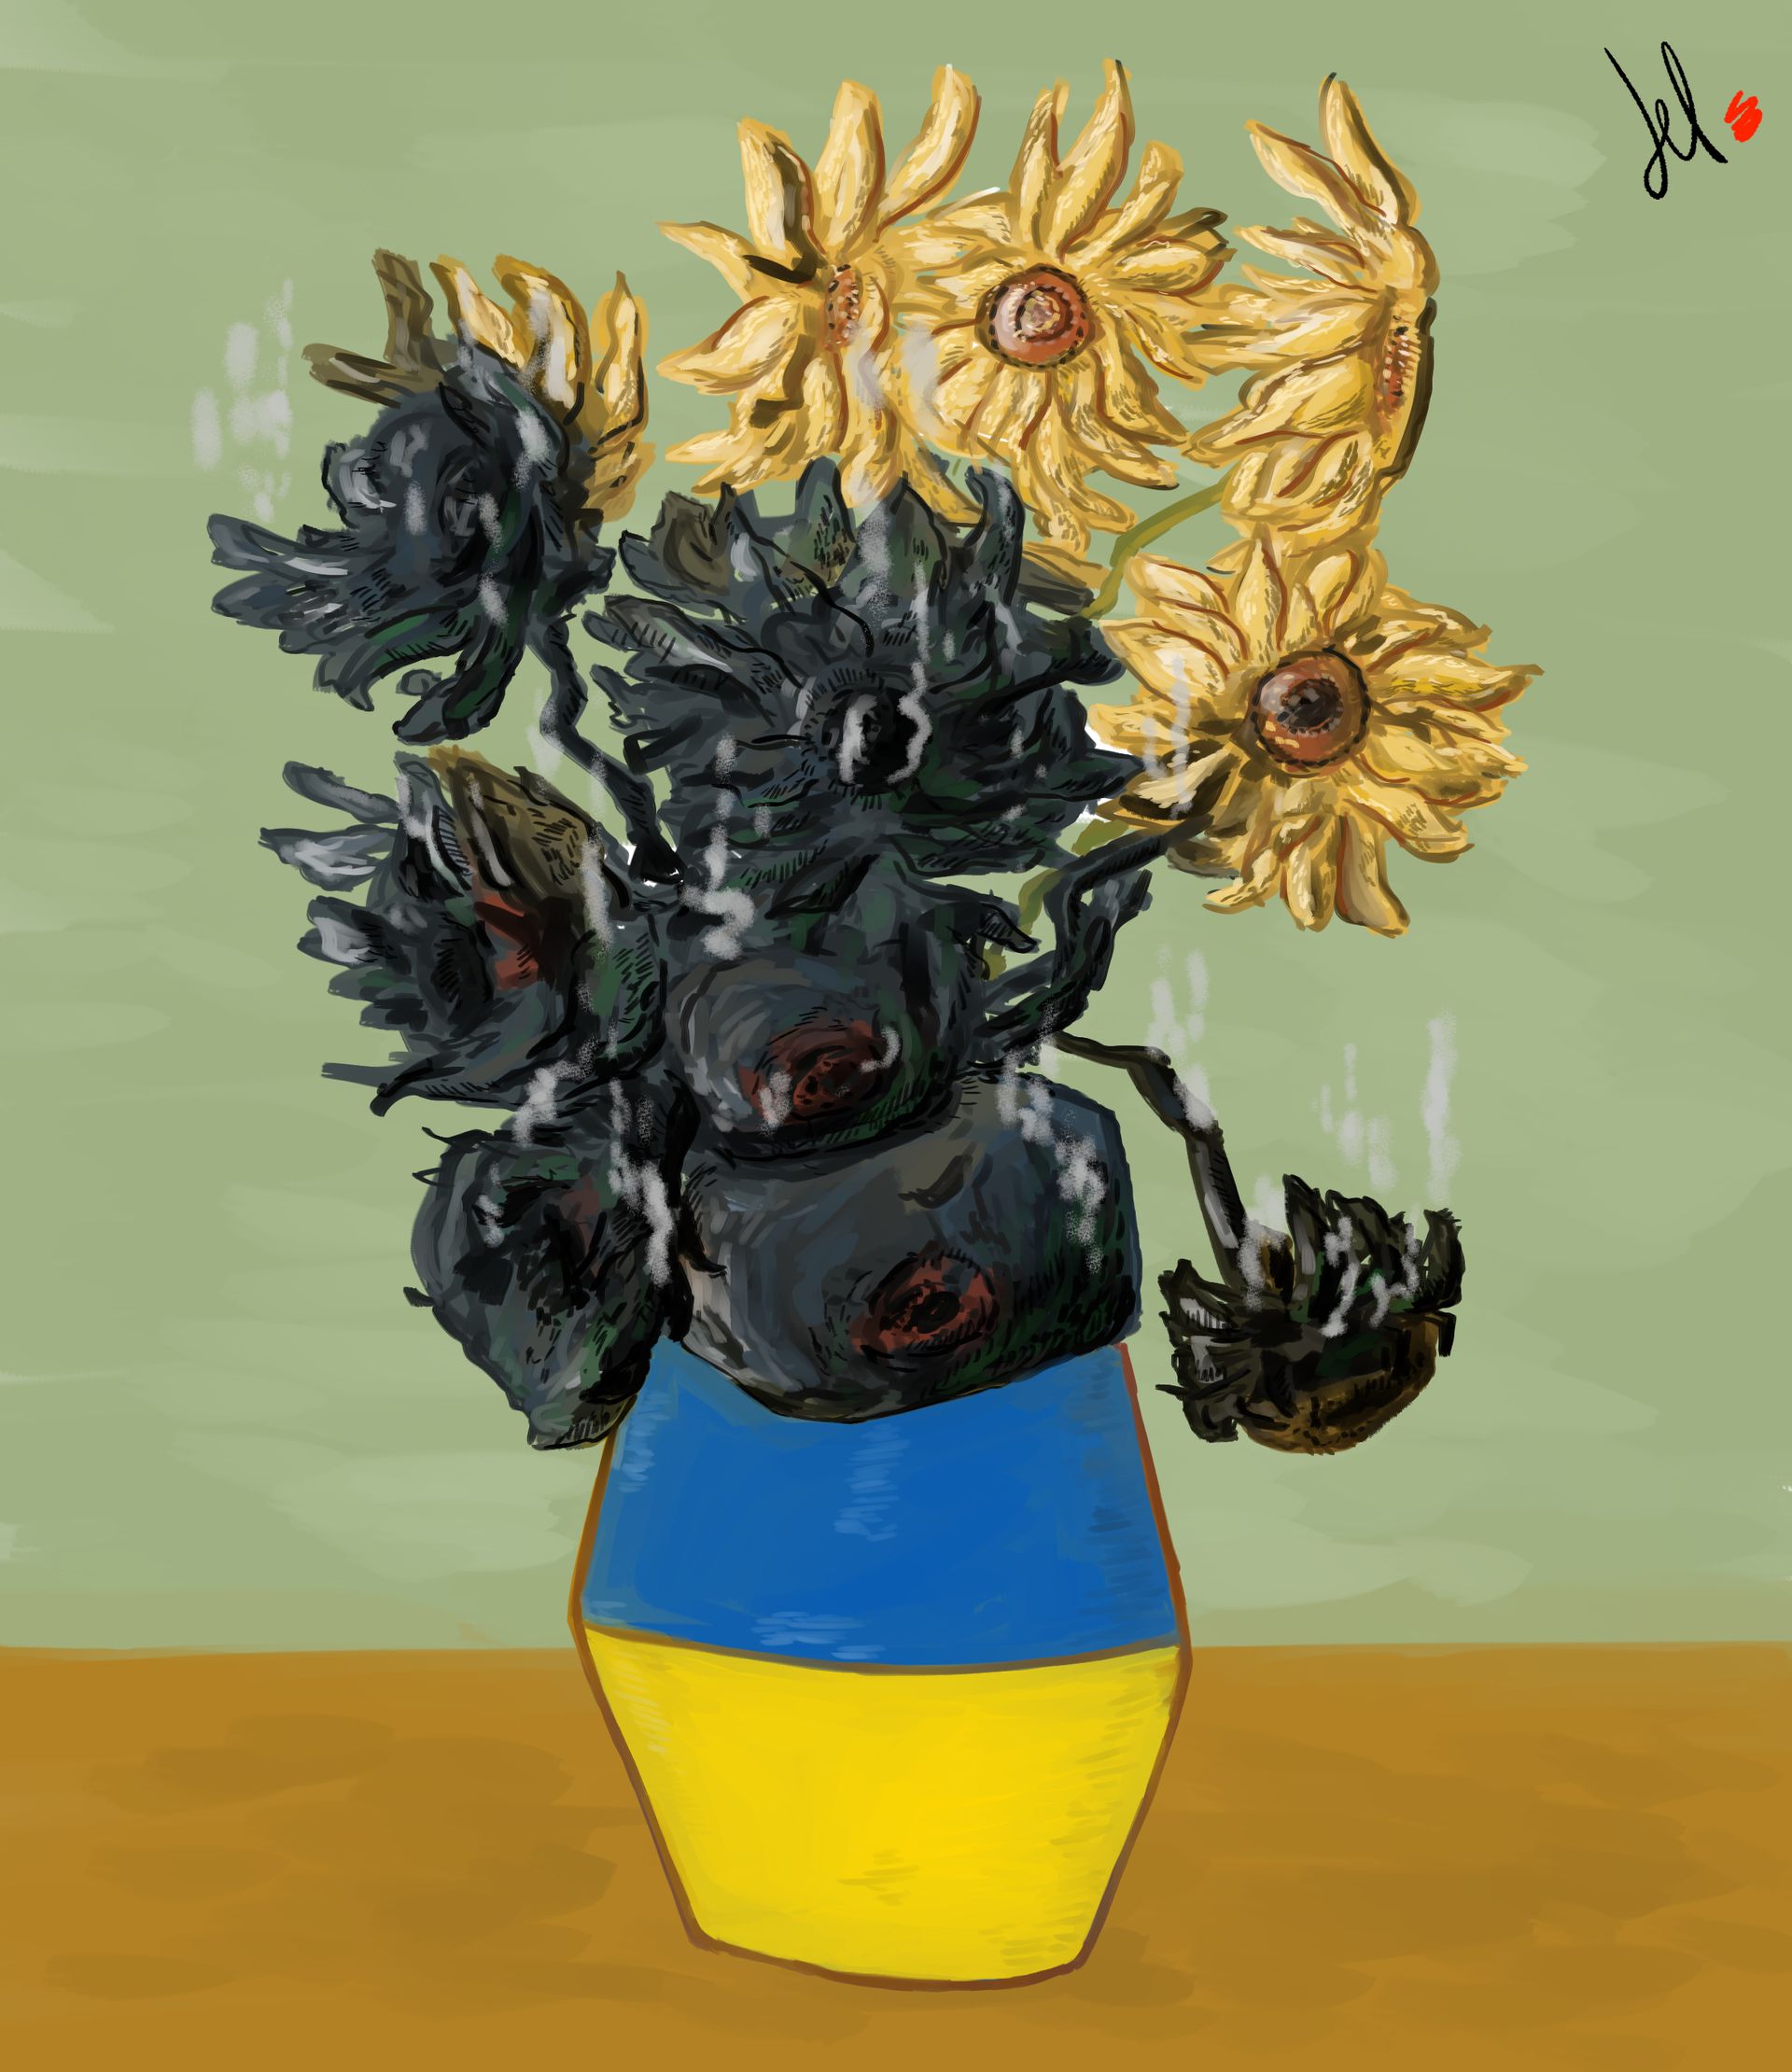 The Ukrainian sunflowers - Del Rosso